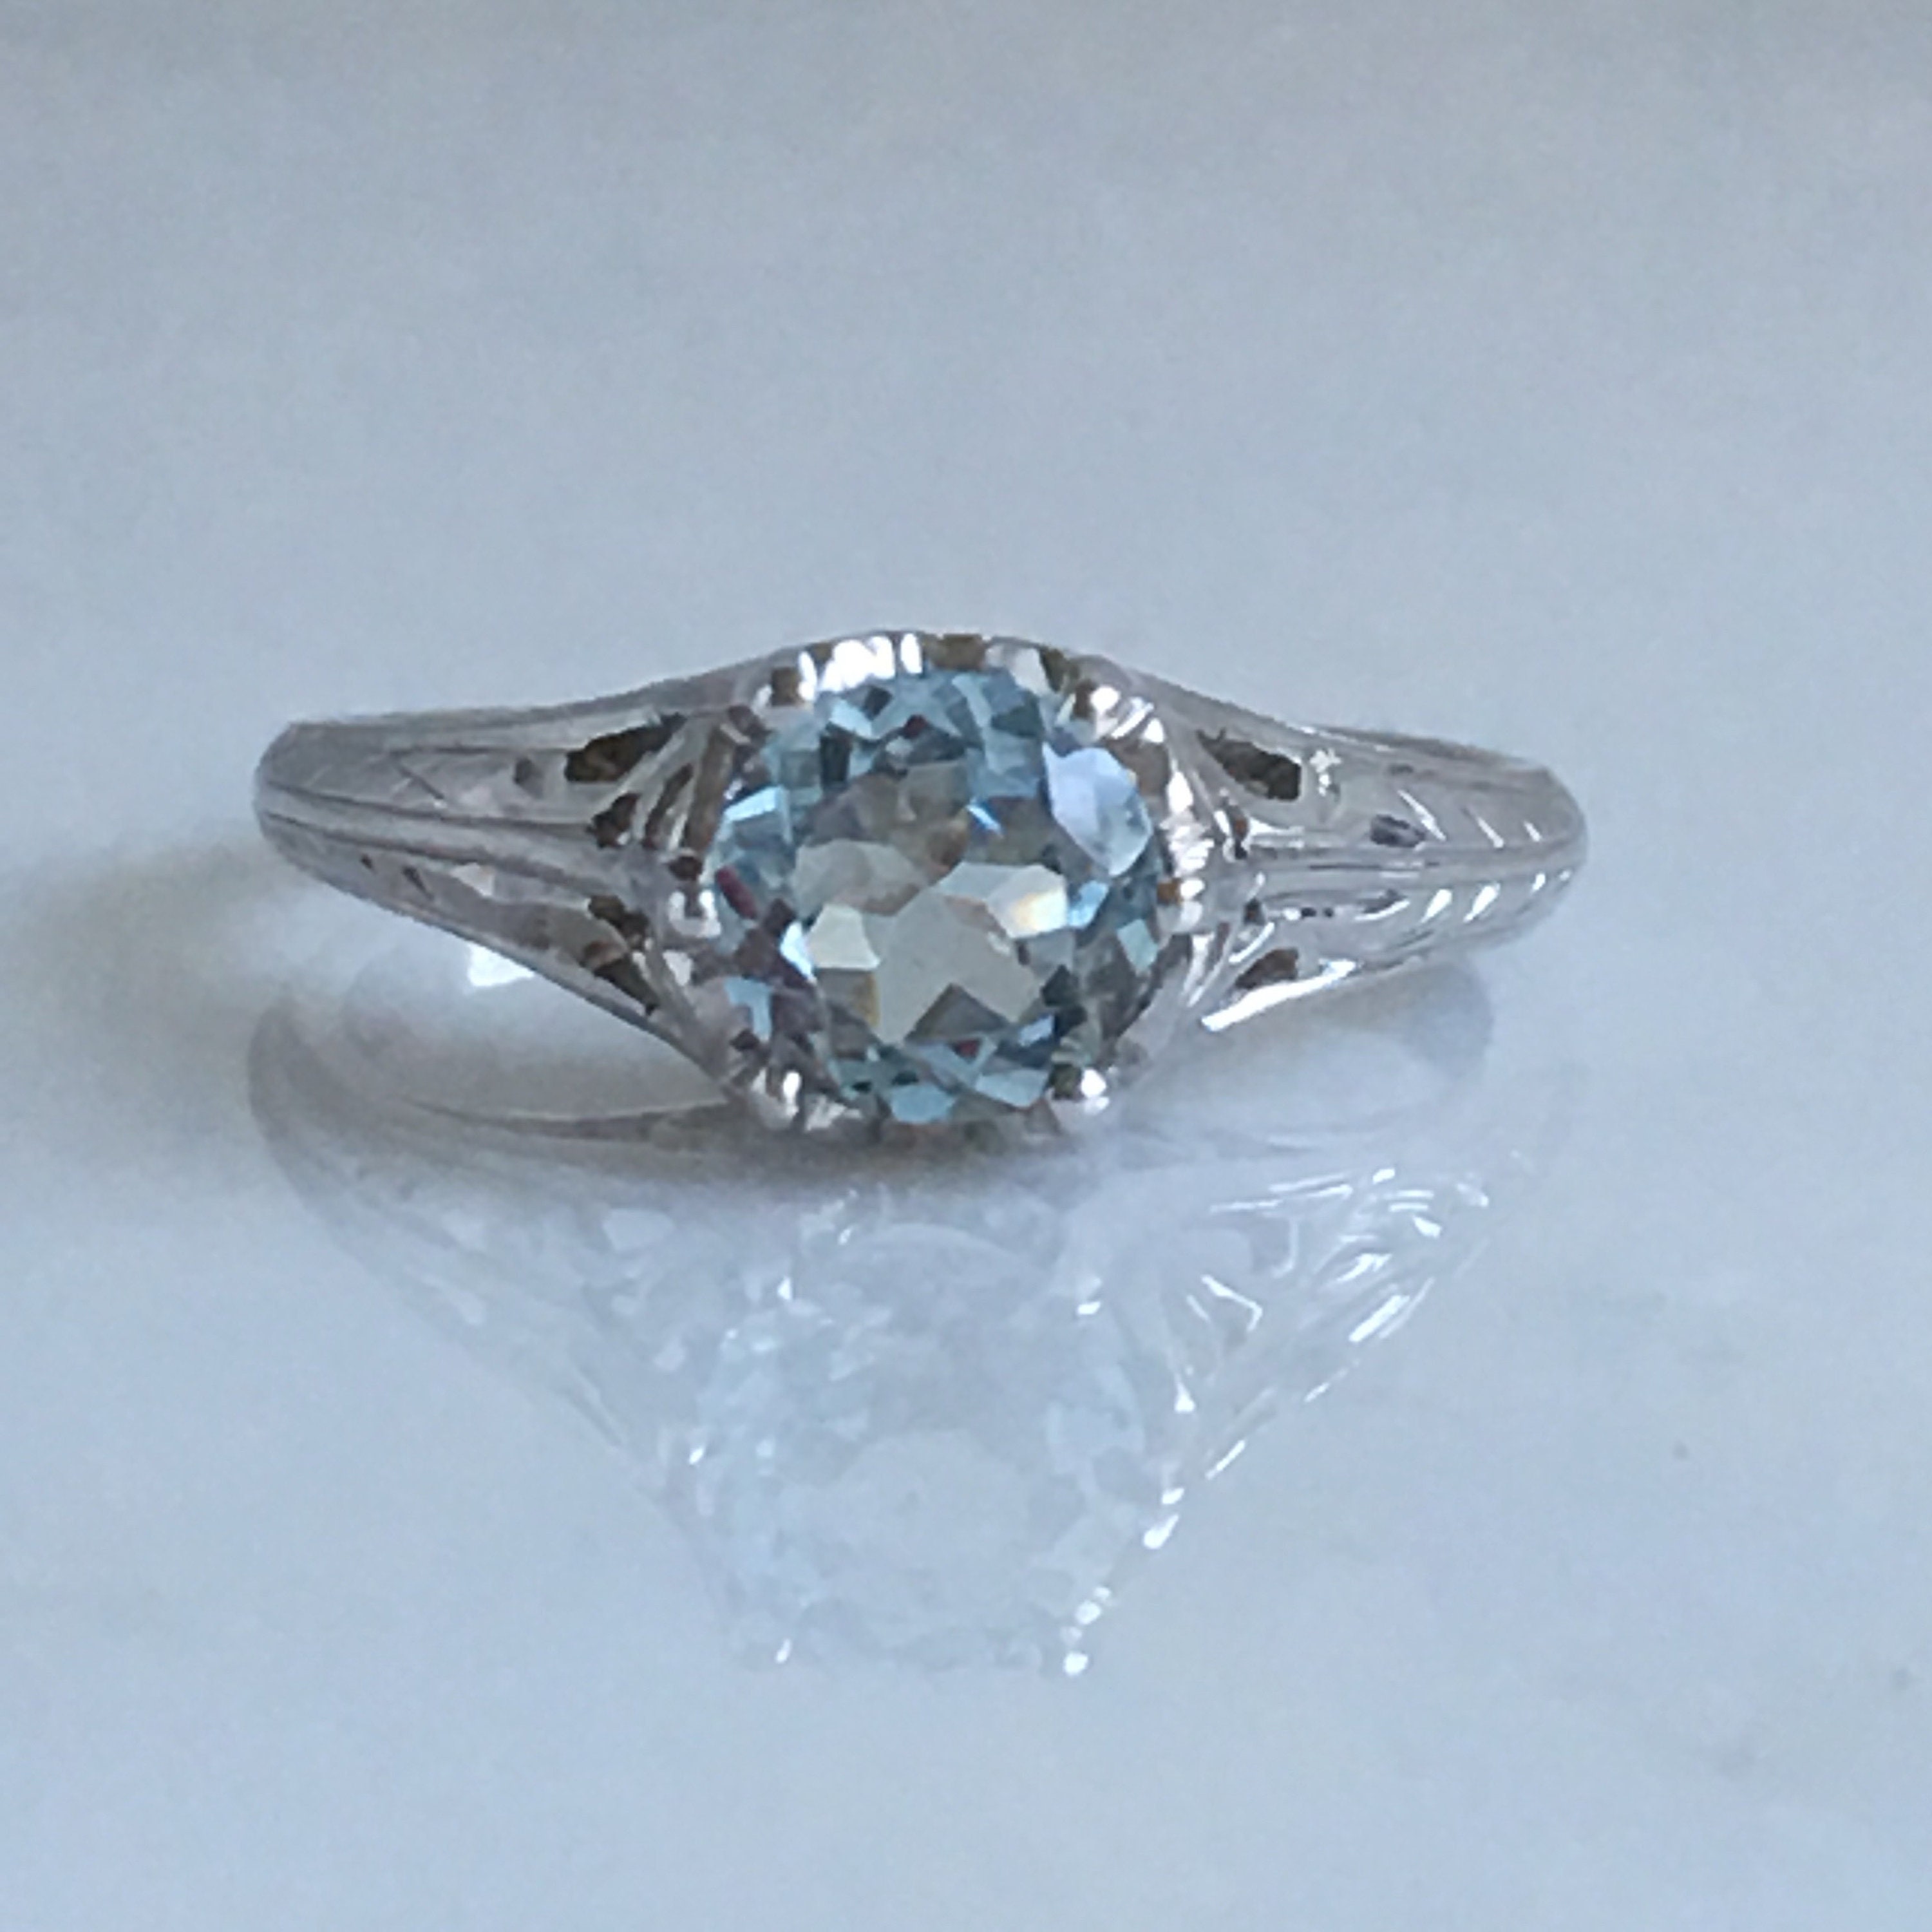 Vintage 14k Gold Filligree Aquamarine CZ Diamond Ring Statement Victorian